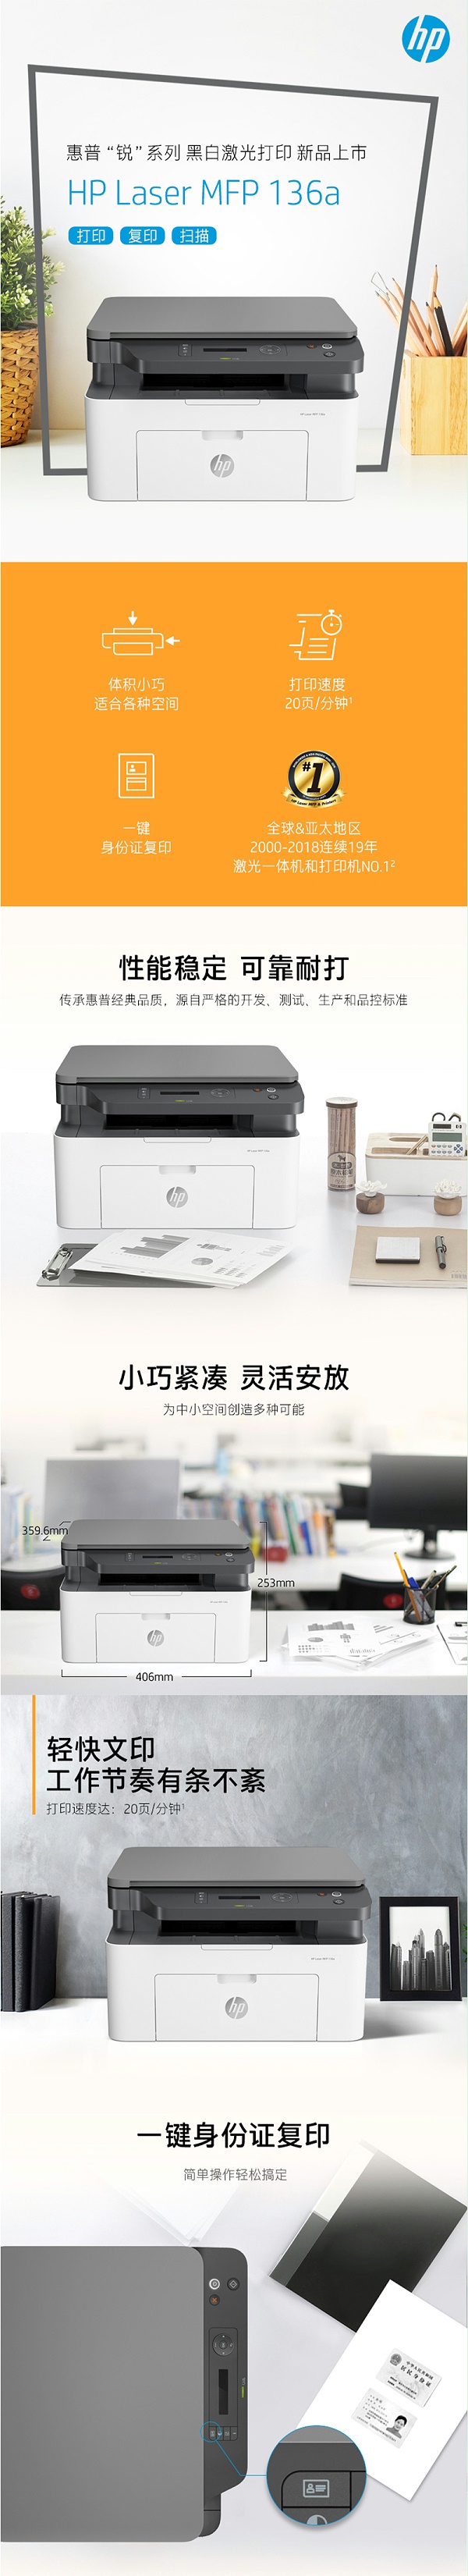 HP 136a 激光打印机